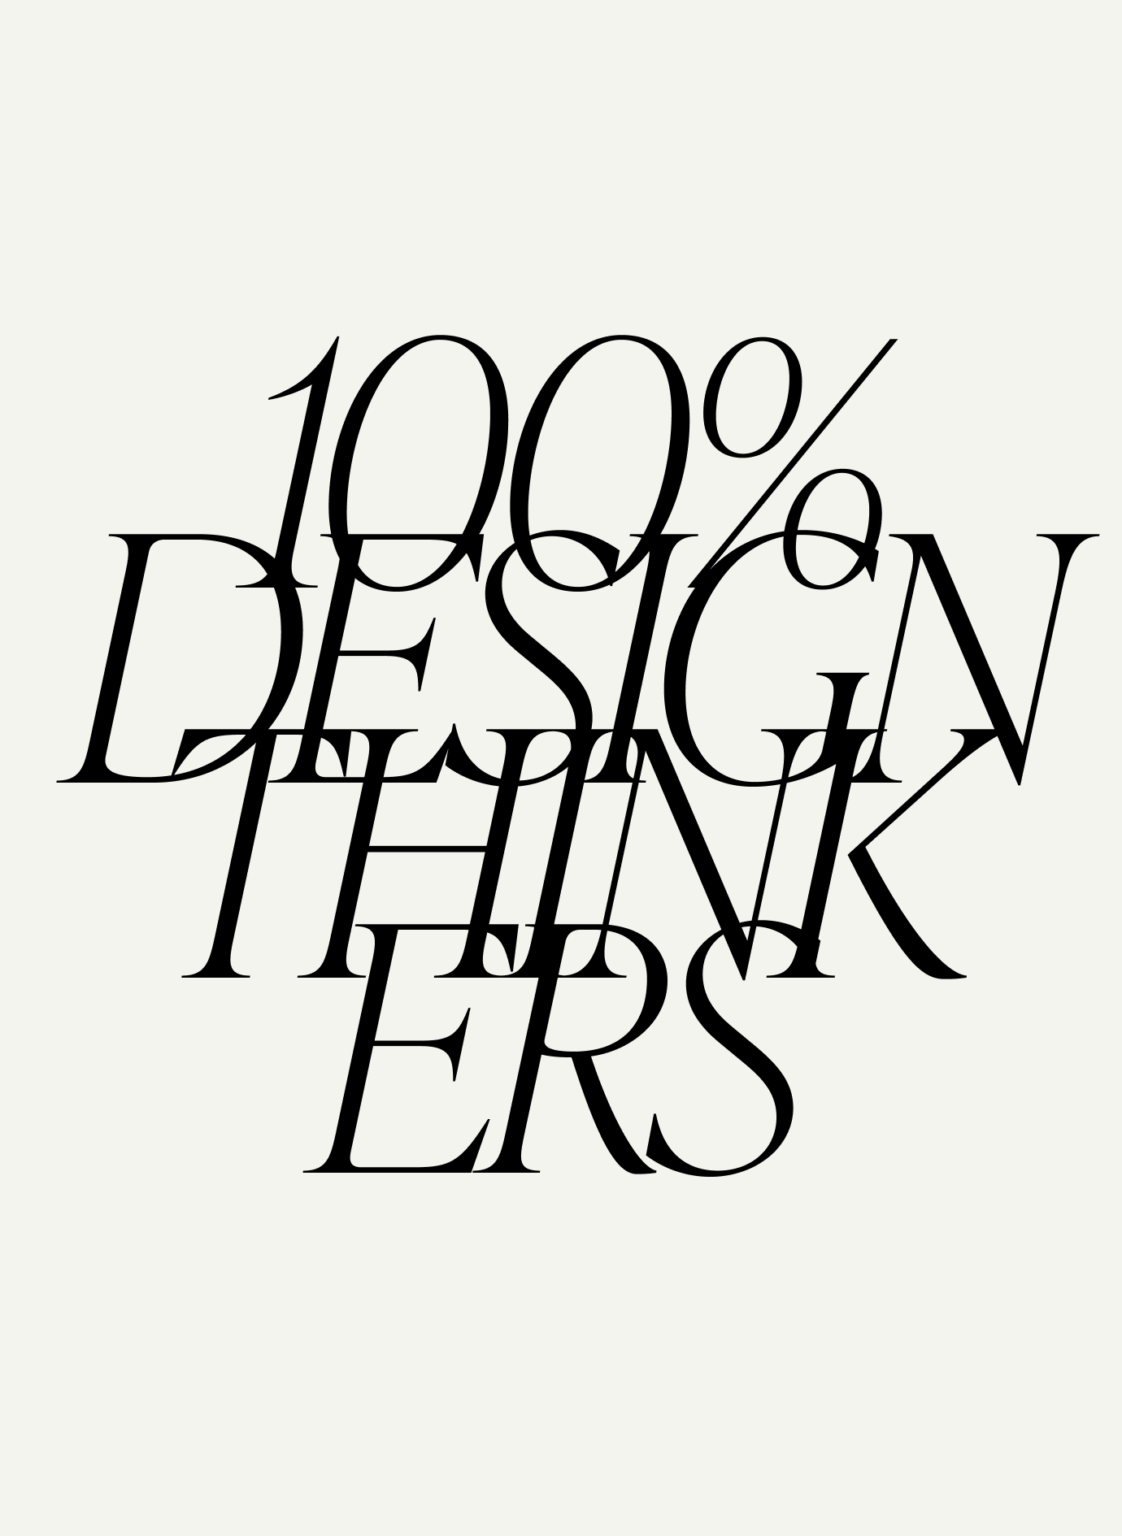 ABC 100% Design Thinkers